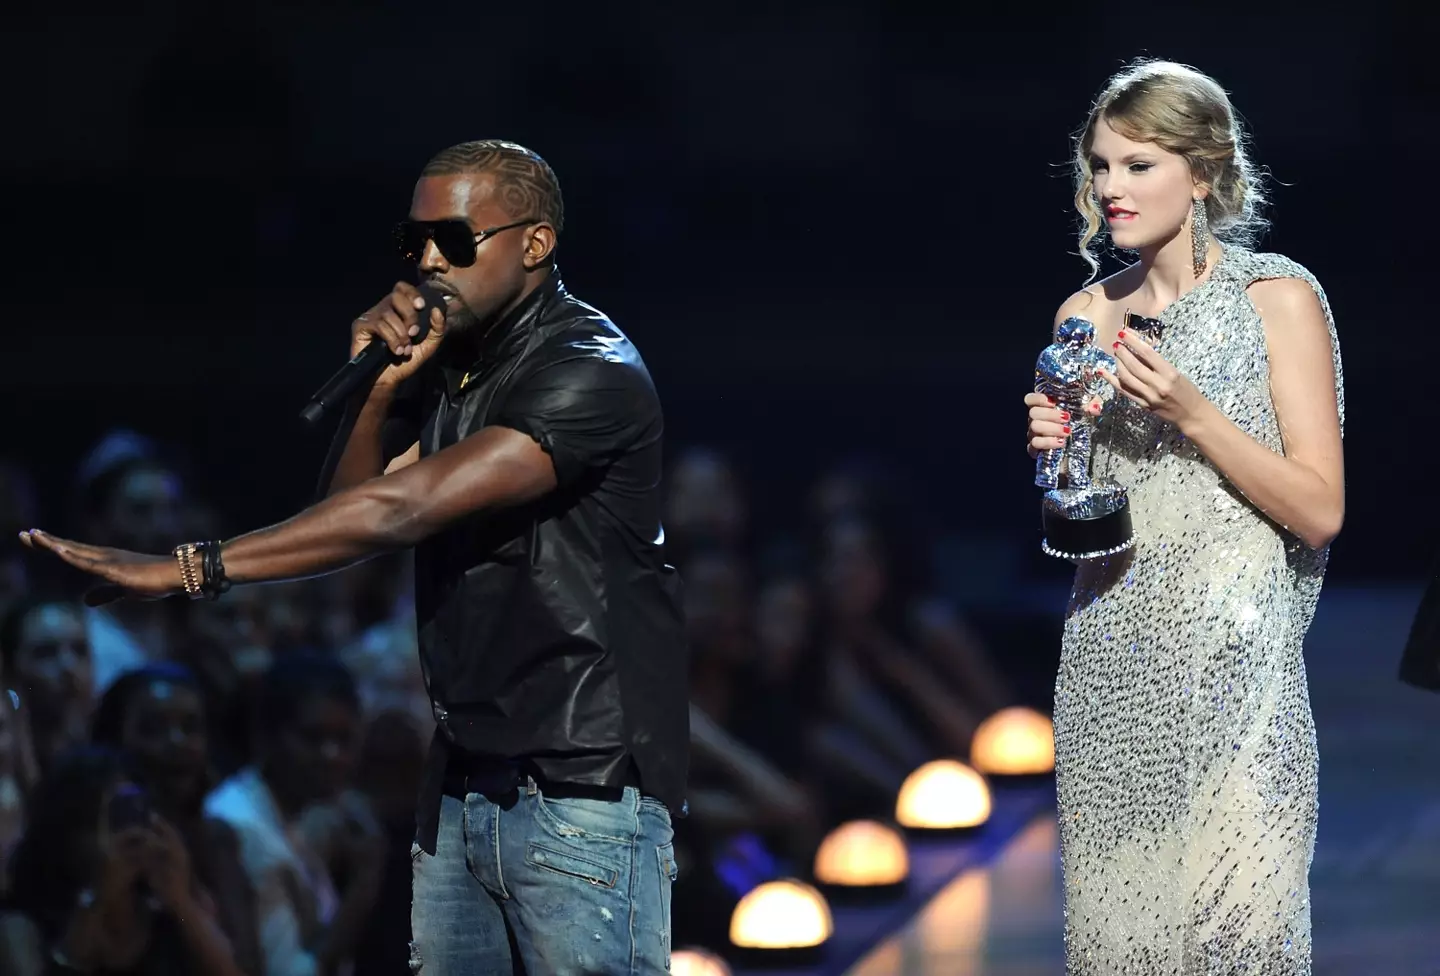 Kanye famously interrupted Taylor at the 2009 VMAs.